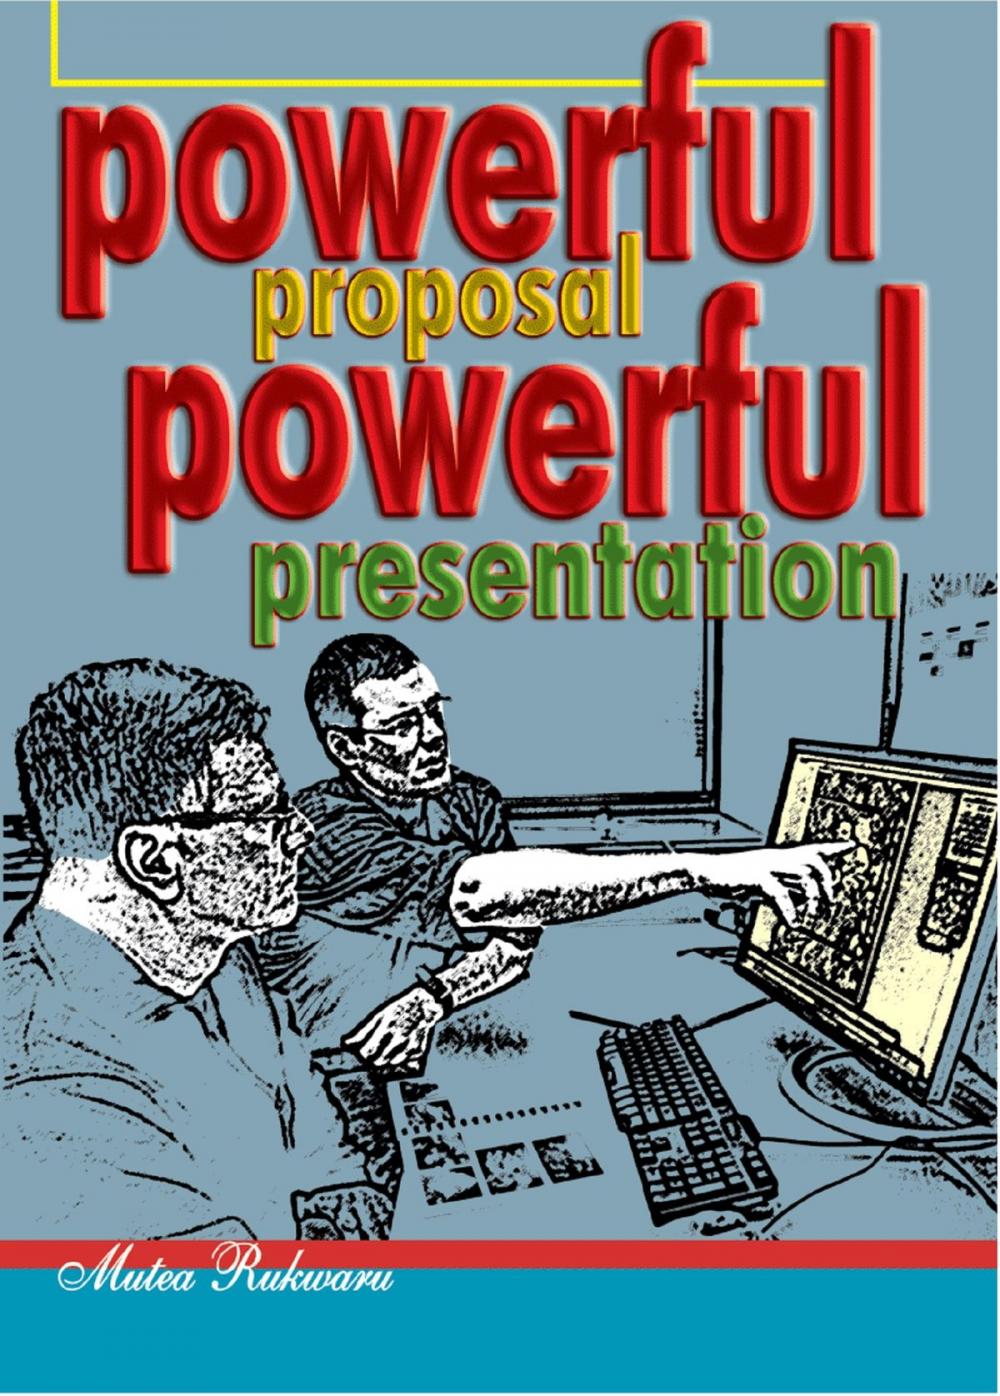 Big bigCover of Powerful Proposal Powerful Presentation